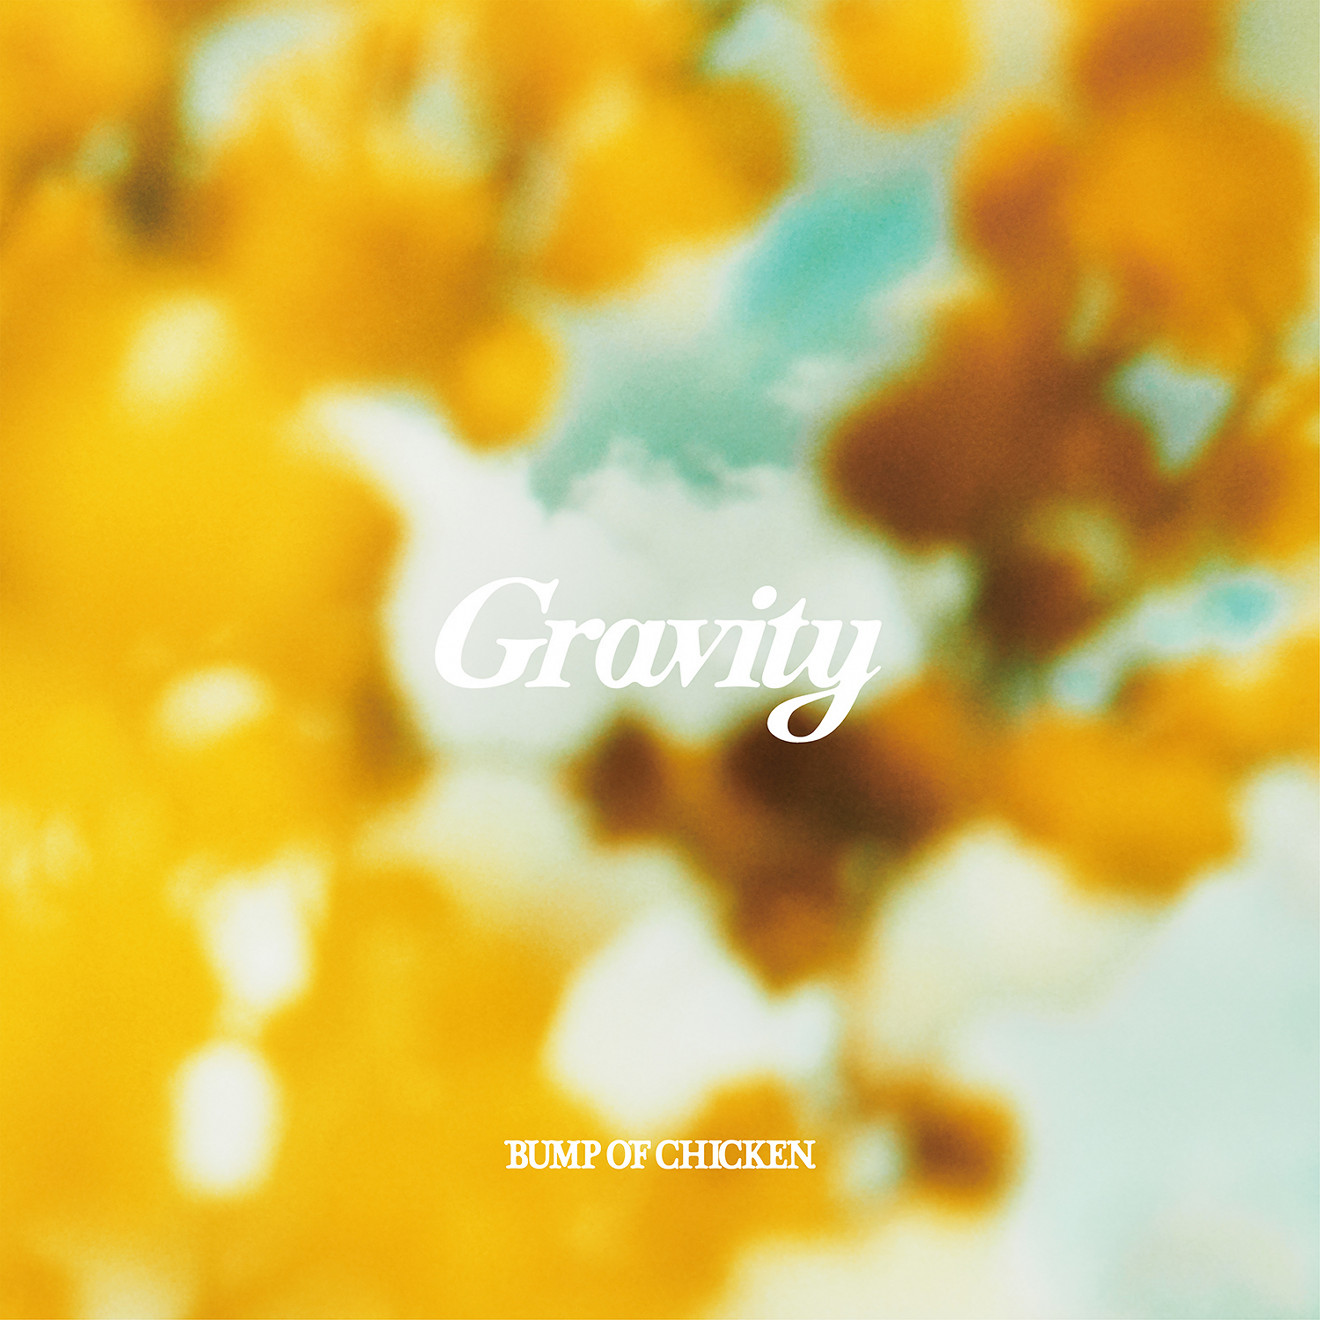 Bump Of Chickenがテーマソングを務めるポケモンスペシャルmv Gotcha 公開 ニューシングル アカシア Gravity 発売も決定 Barks